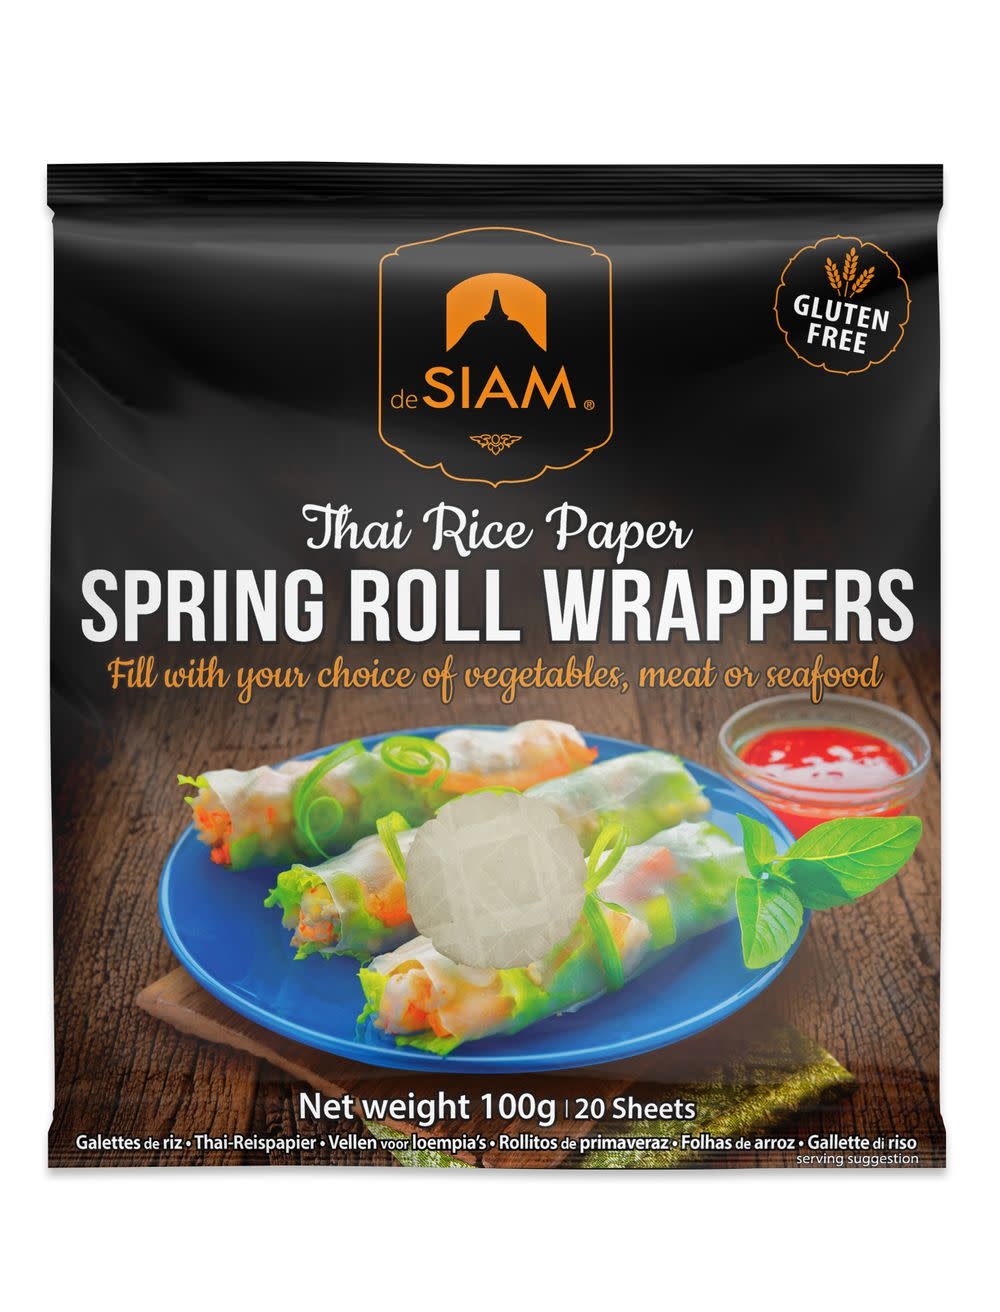 Desiam DeSiam - Spring Roll Wrappers